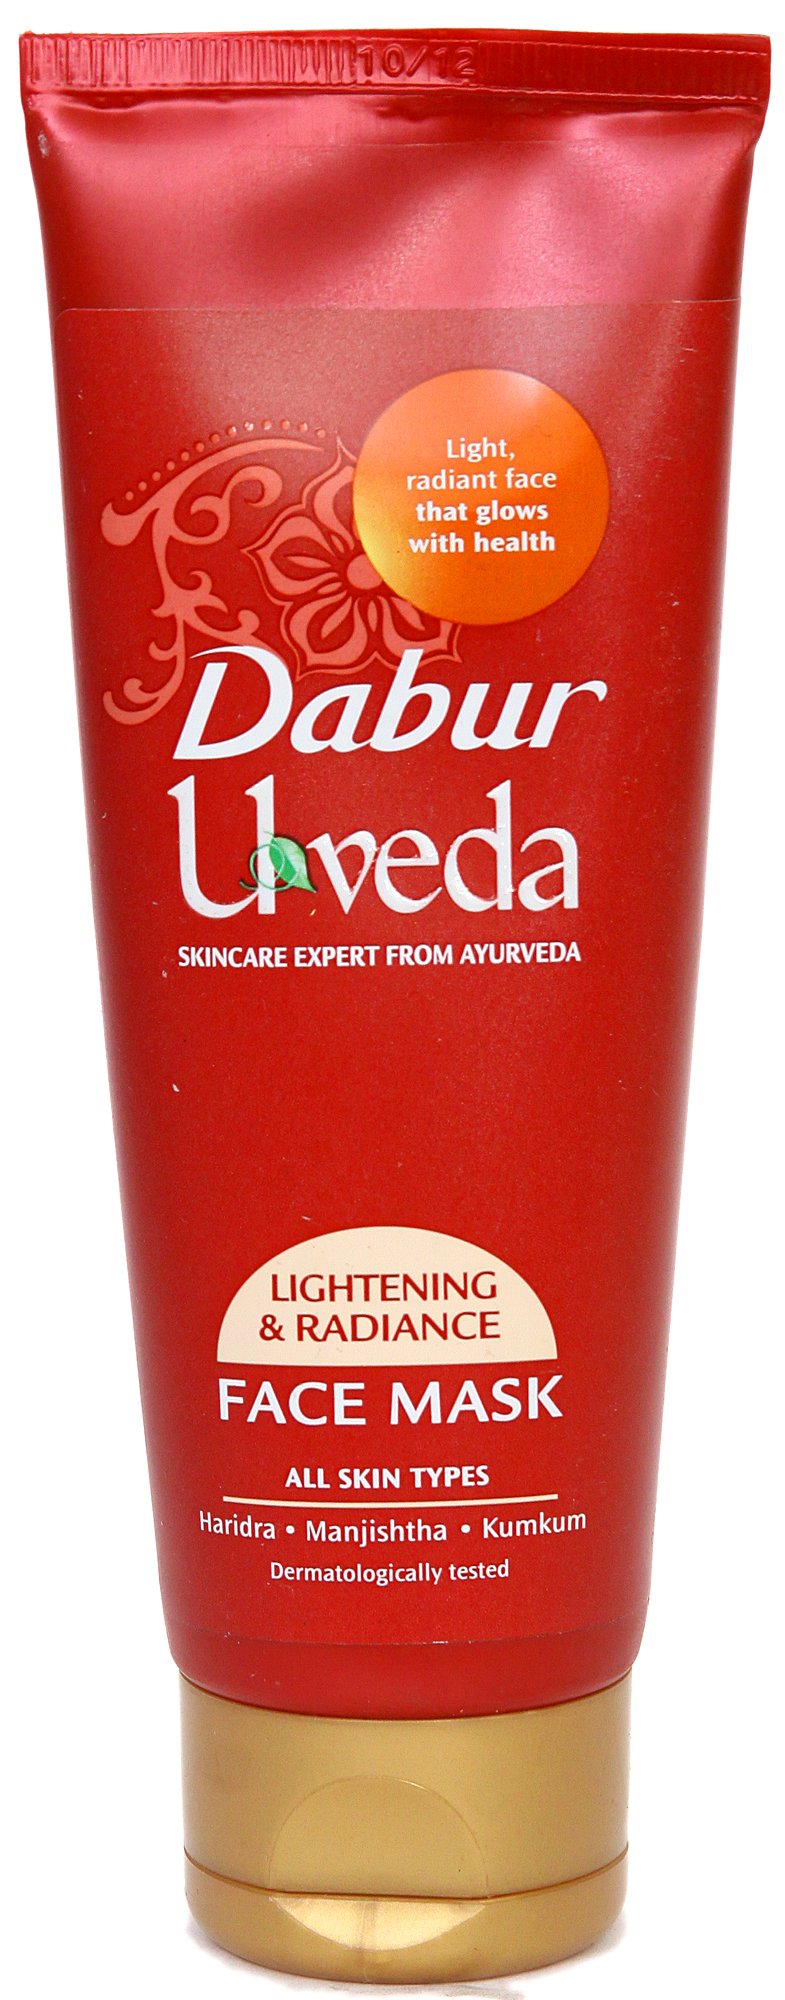 Dabur Uveda Lightening & Radiance Face Mask( All Skin Types) - book cover